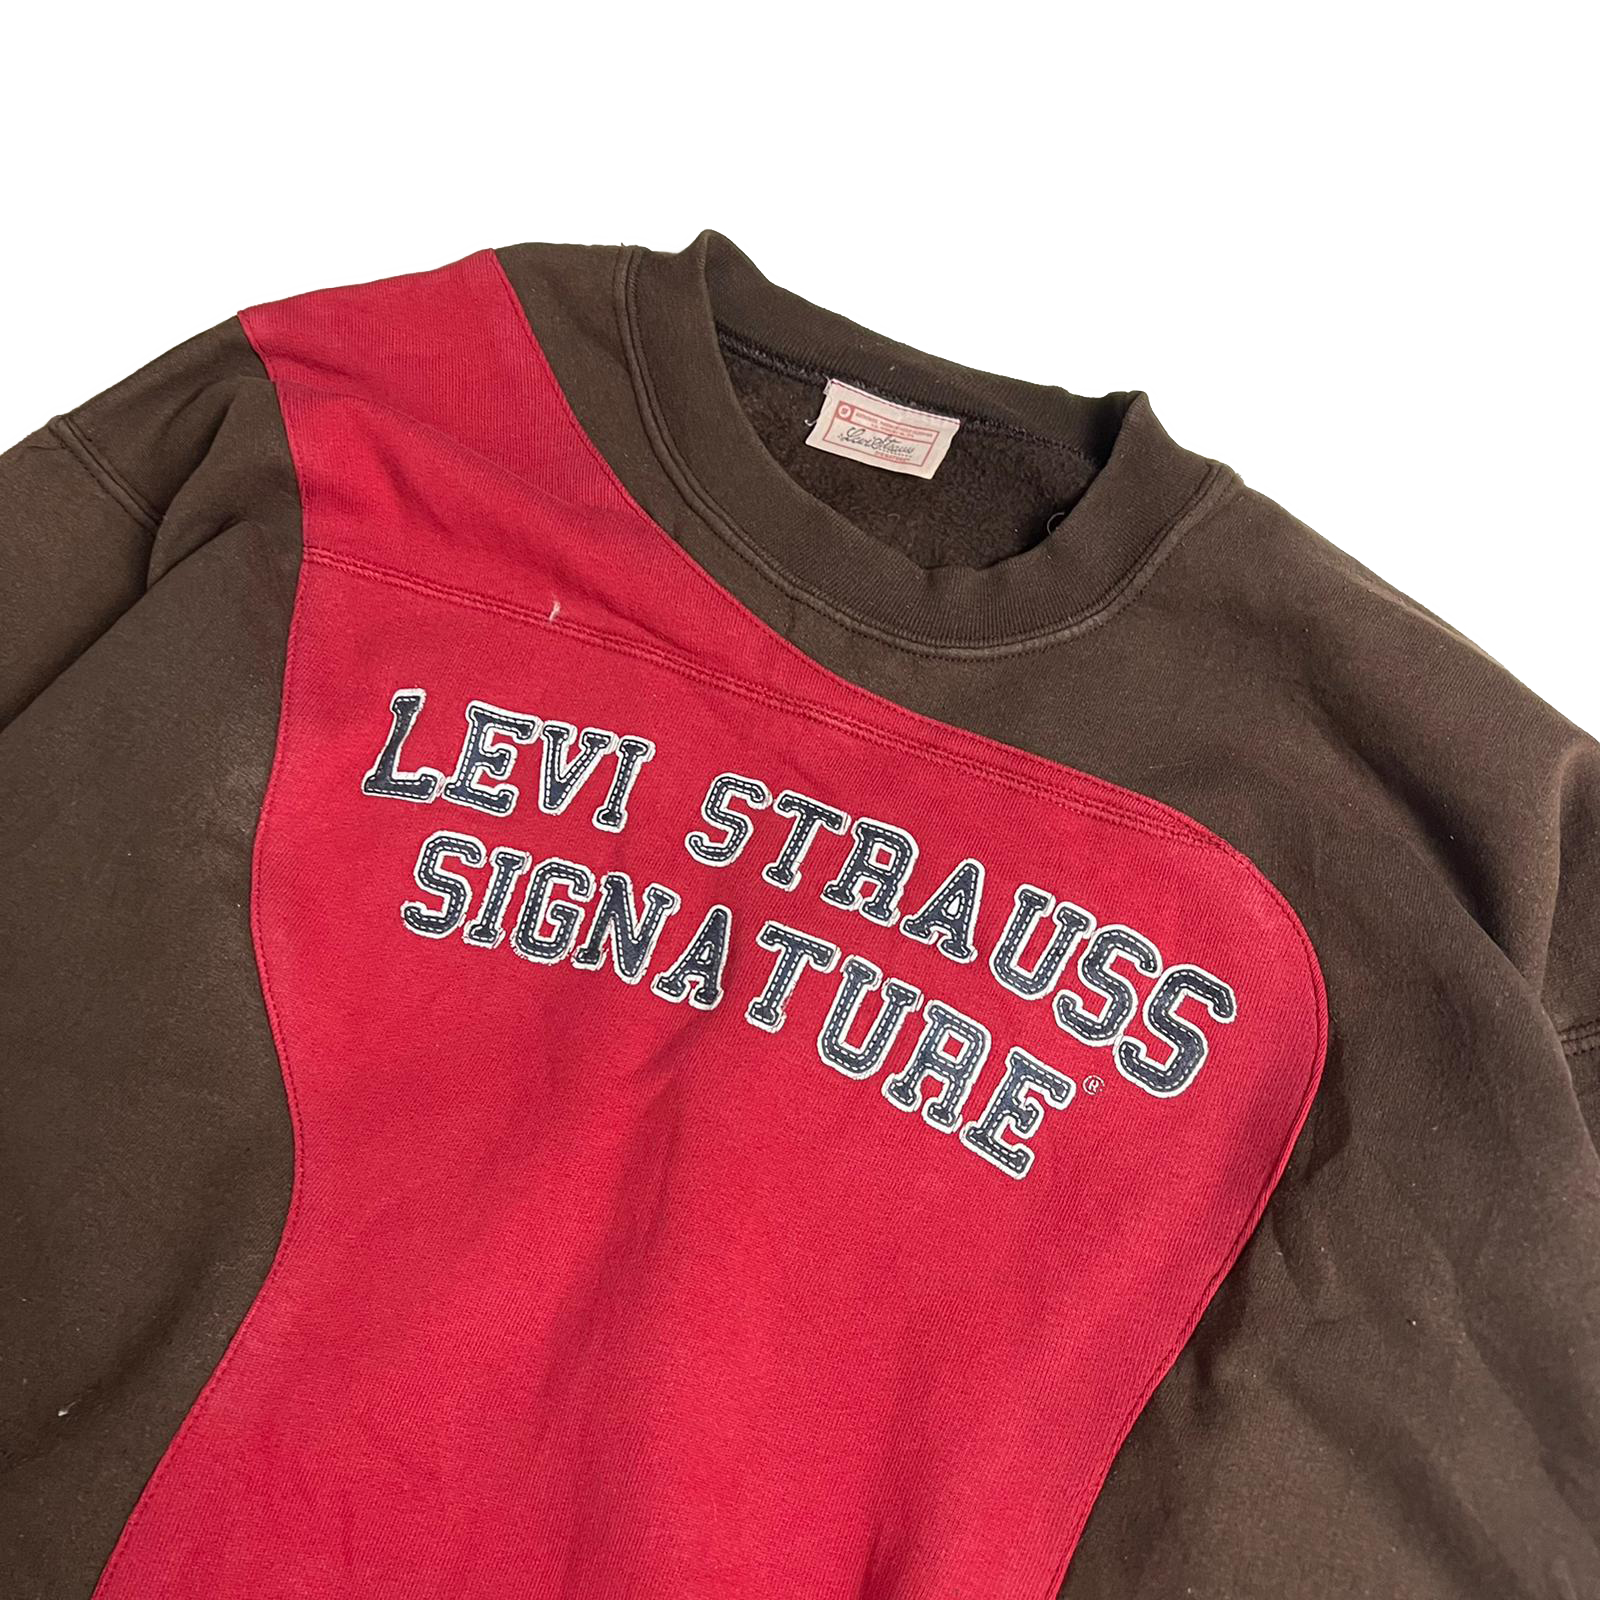 Reworked Levi's sweatshirt